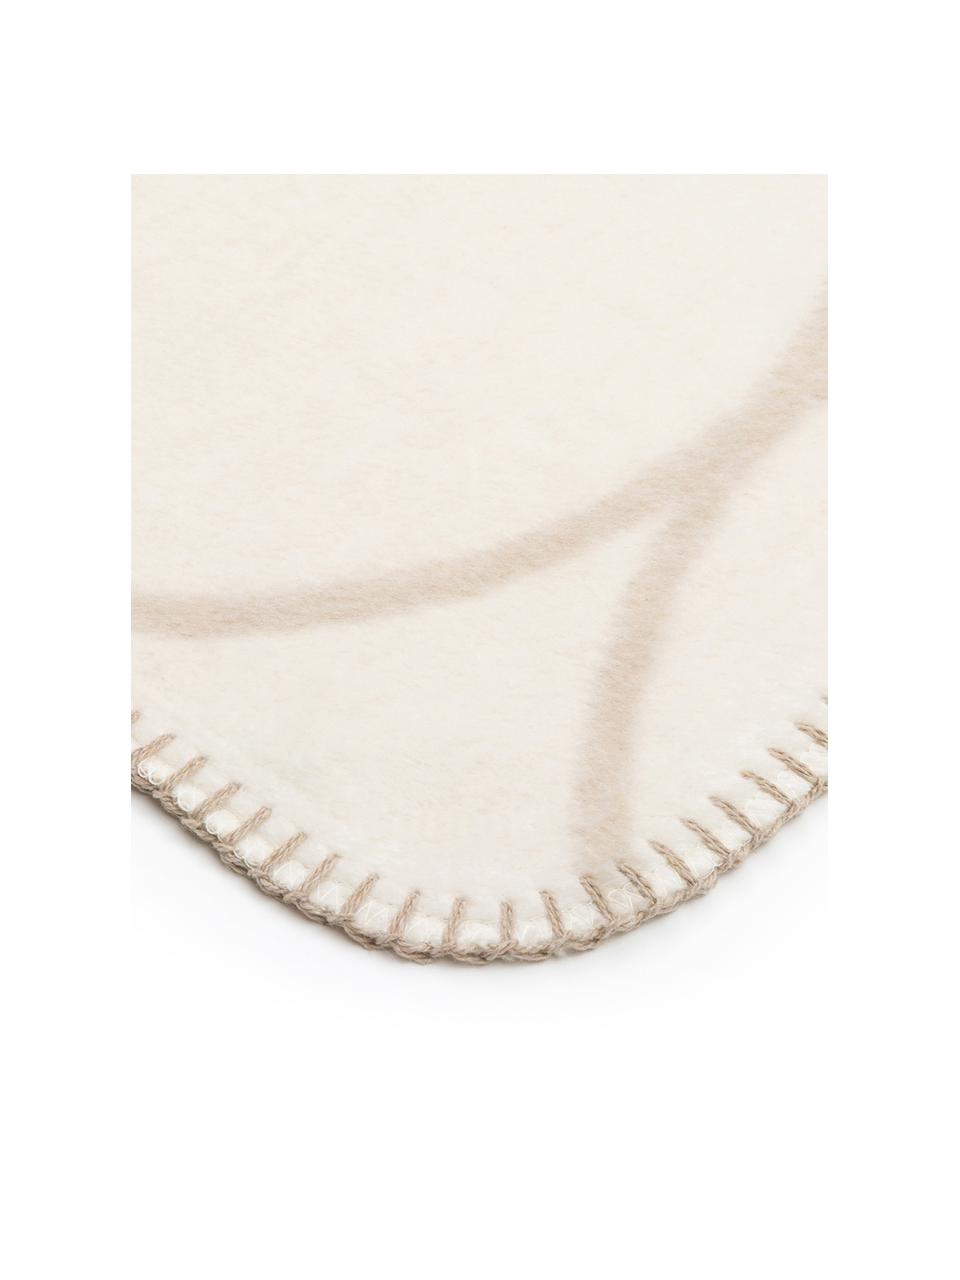 Plaid reversibile in velour Bamboo Circles, Tessuto: Jacquard, Toni beige, Larg. 150 x Lung. 200 cm